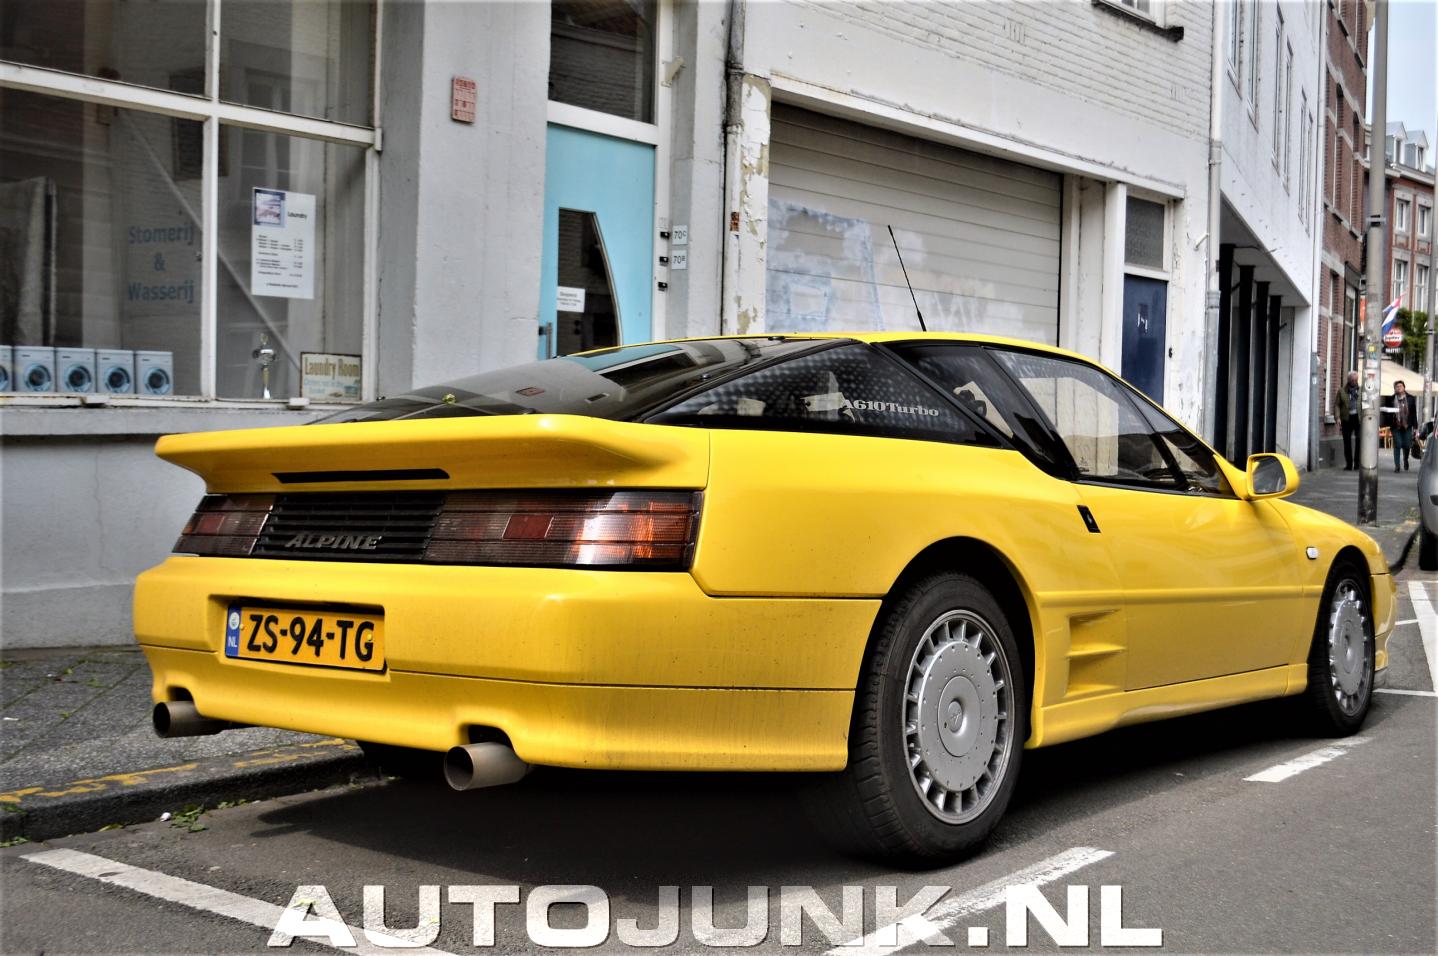 Alpine A610 Turbo V6 1994 autojunk nl renault-alpine-a610-turbo_02